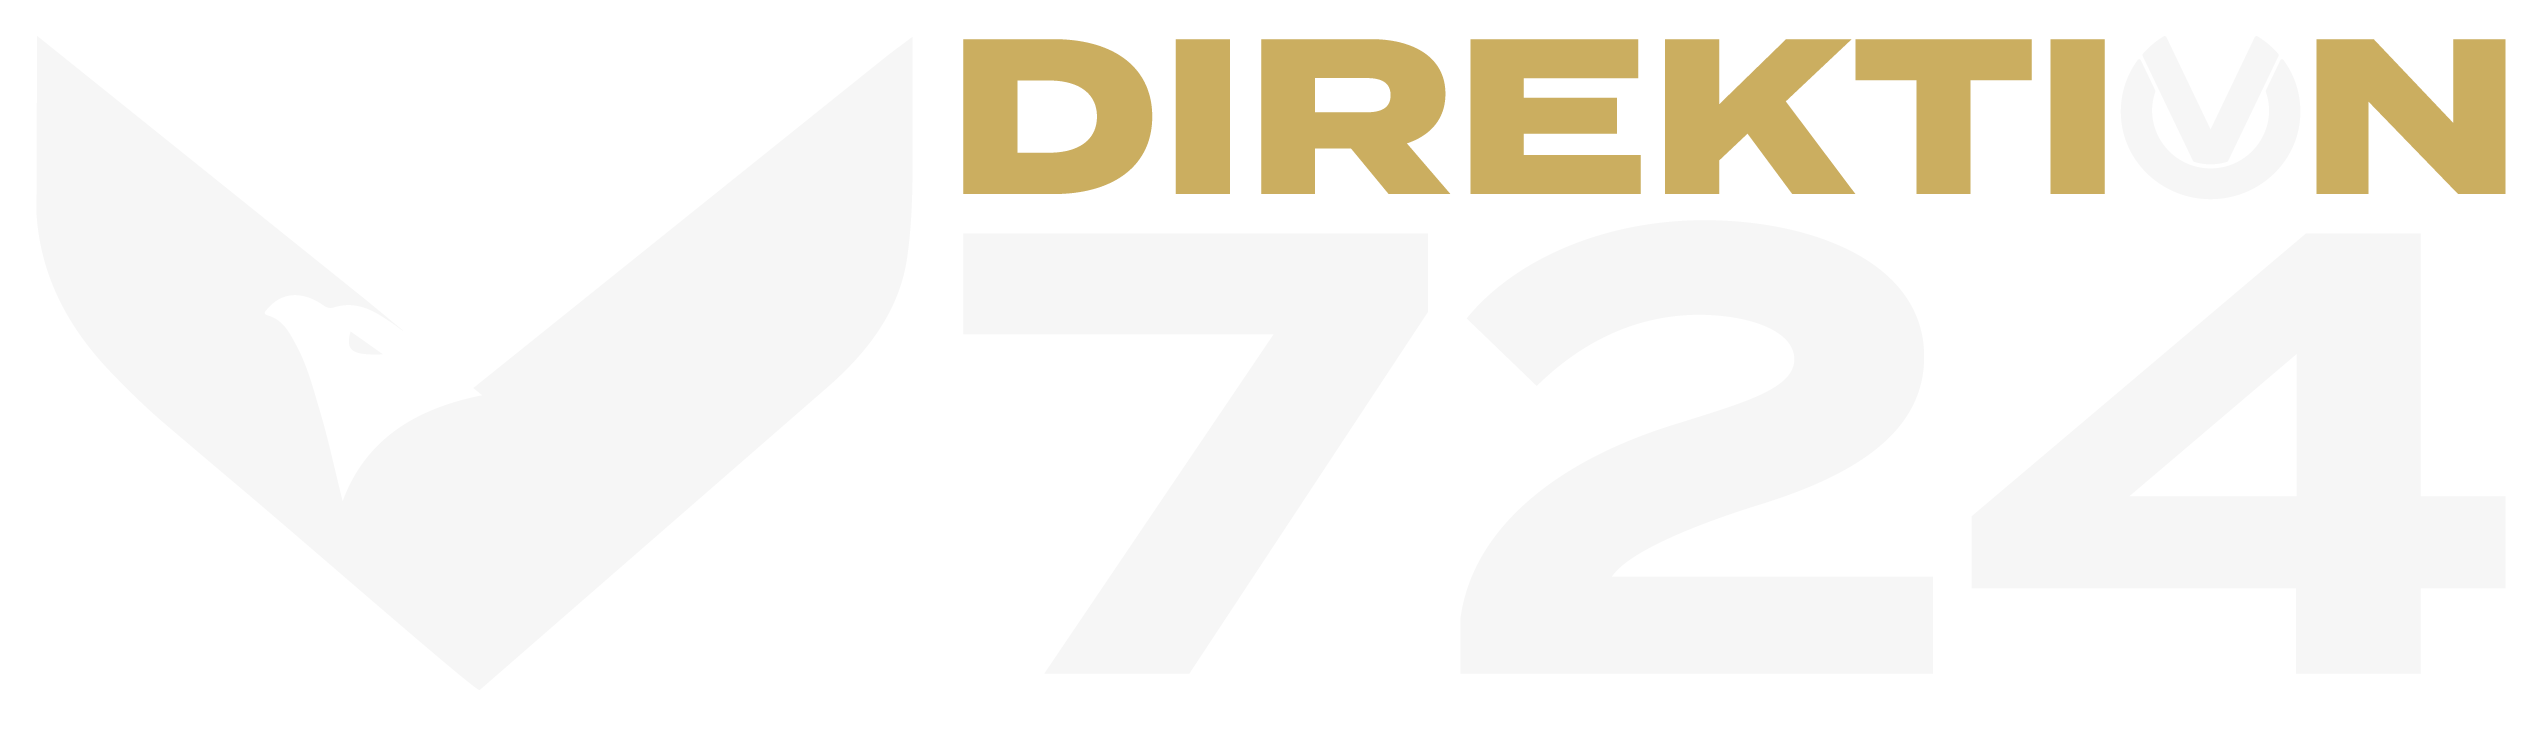 Direktion 724